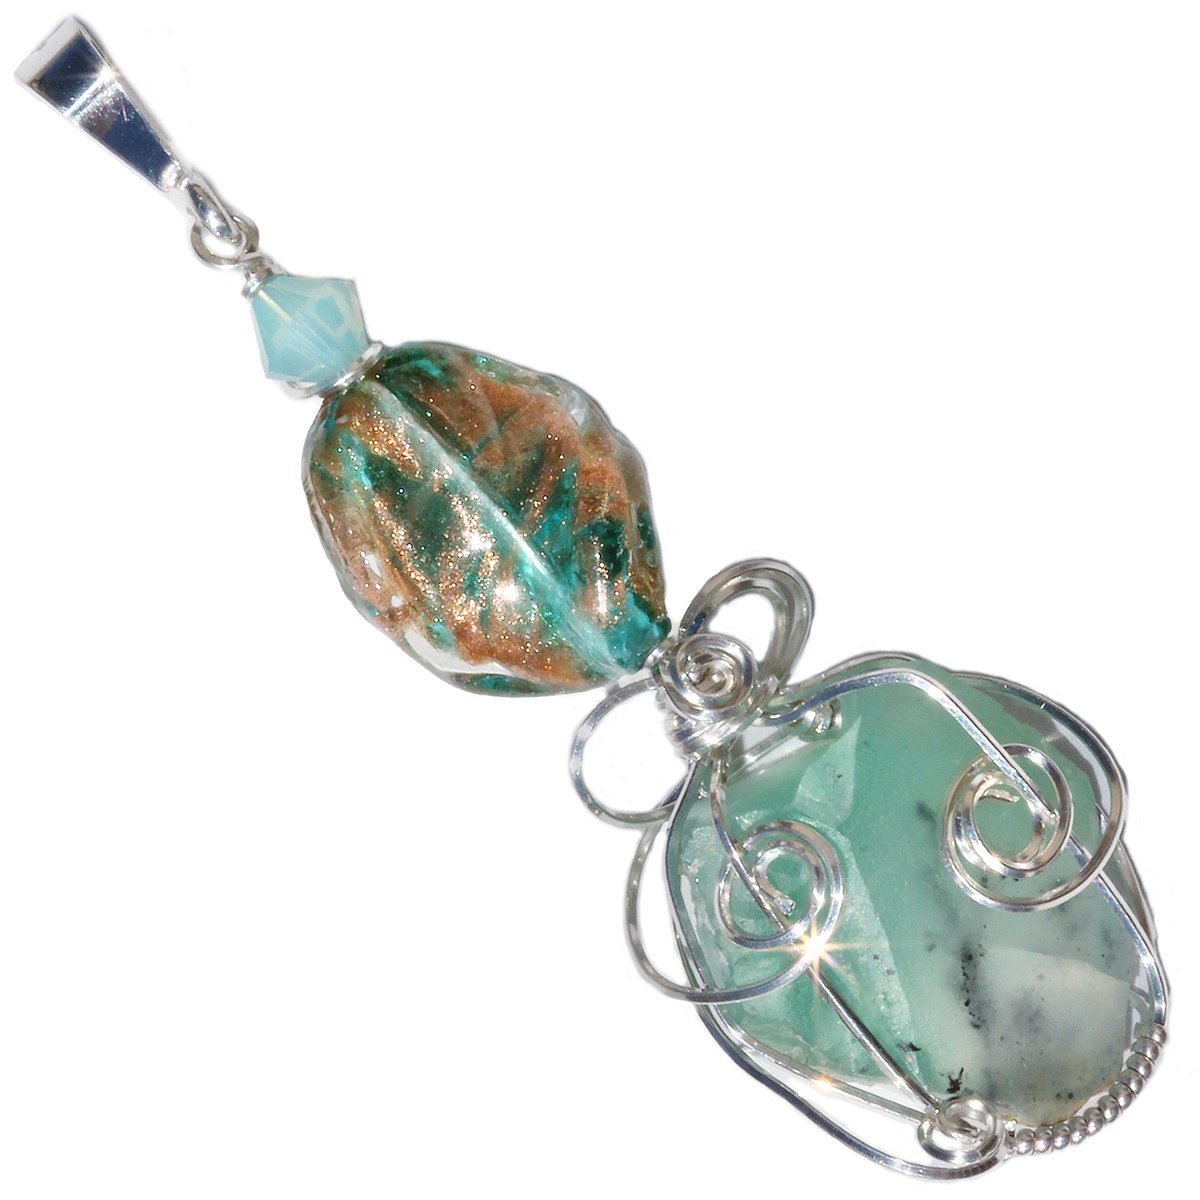 Aquaprase Pendant with Vintage Venetian Glass Bead